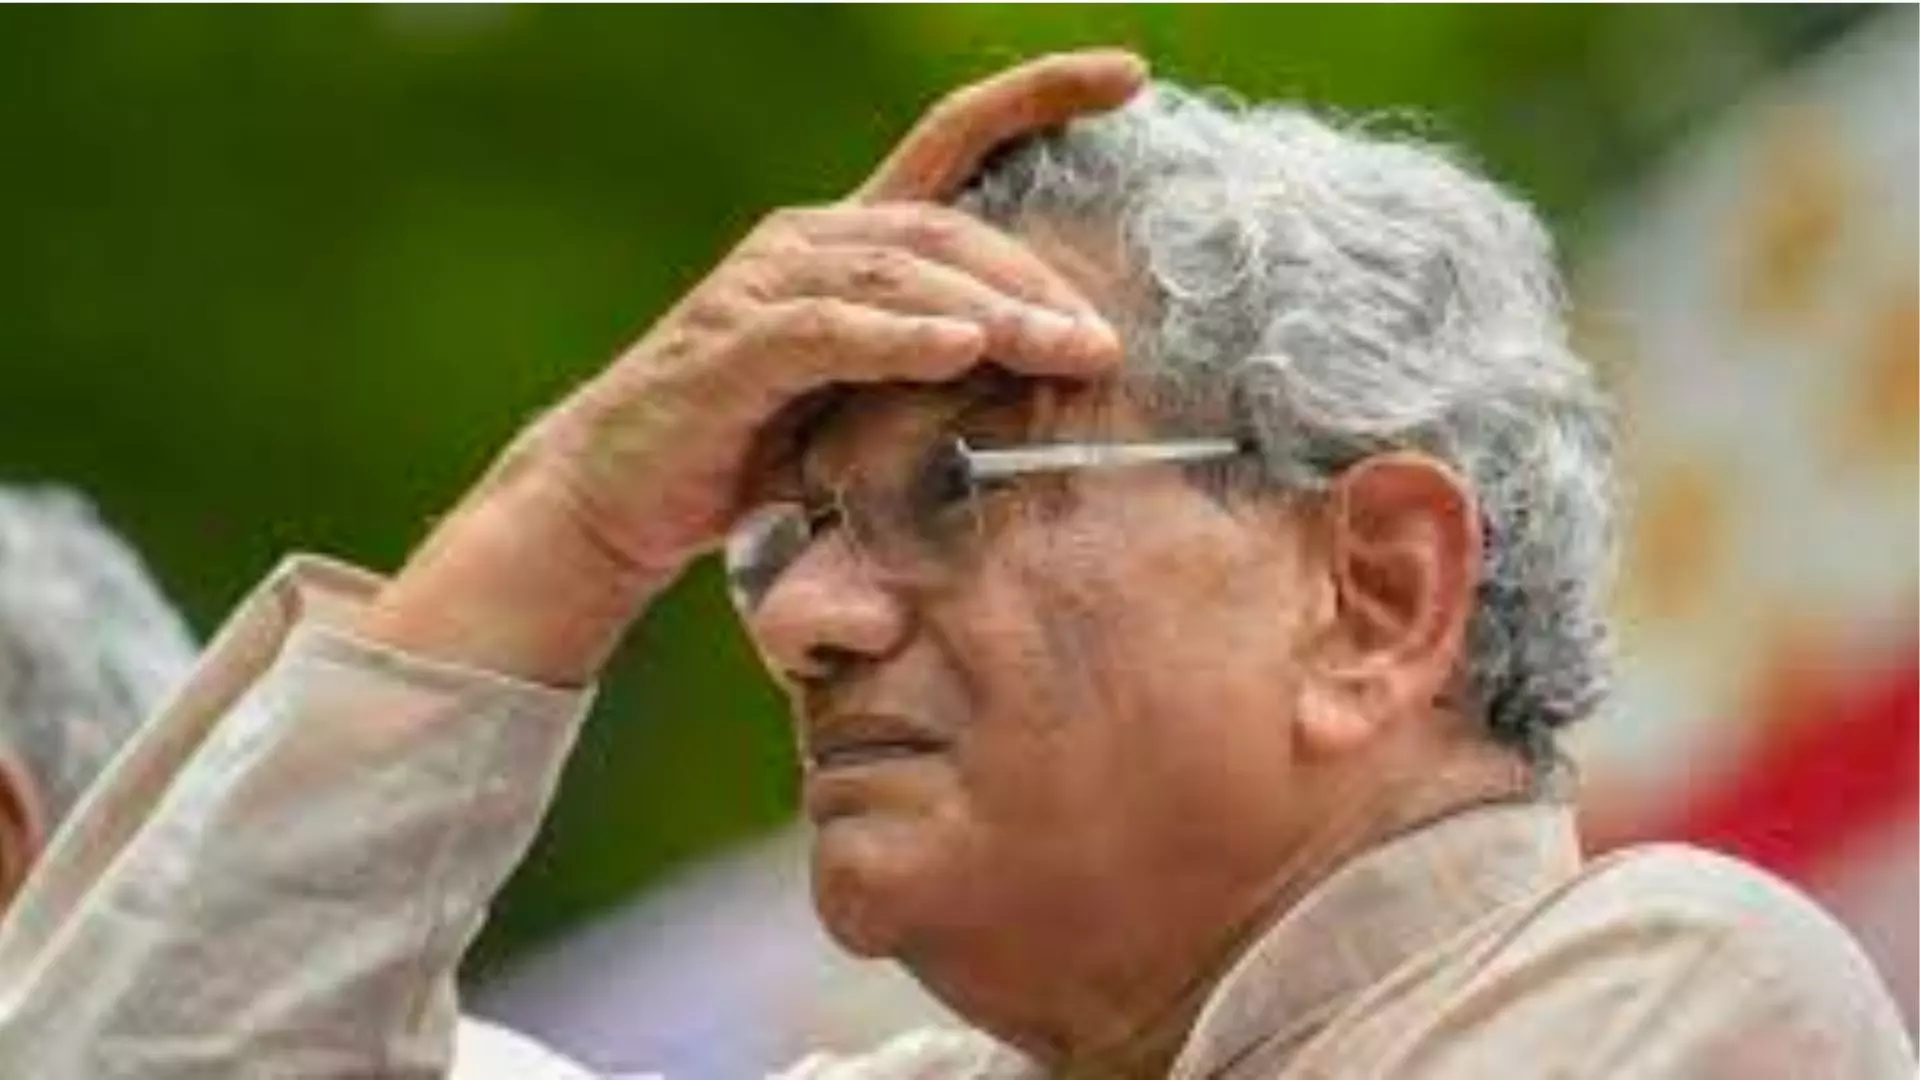 Demand of Kerala CM’s arrest highly condemnable: Yechury